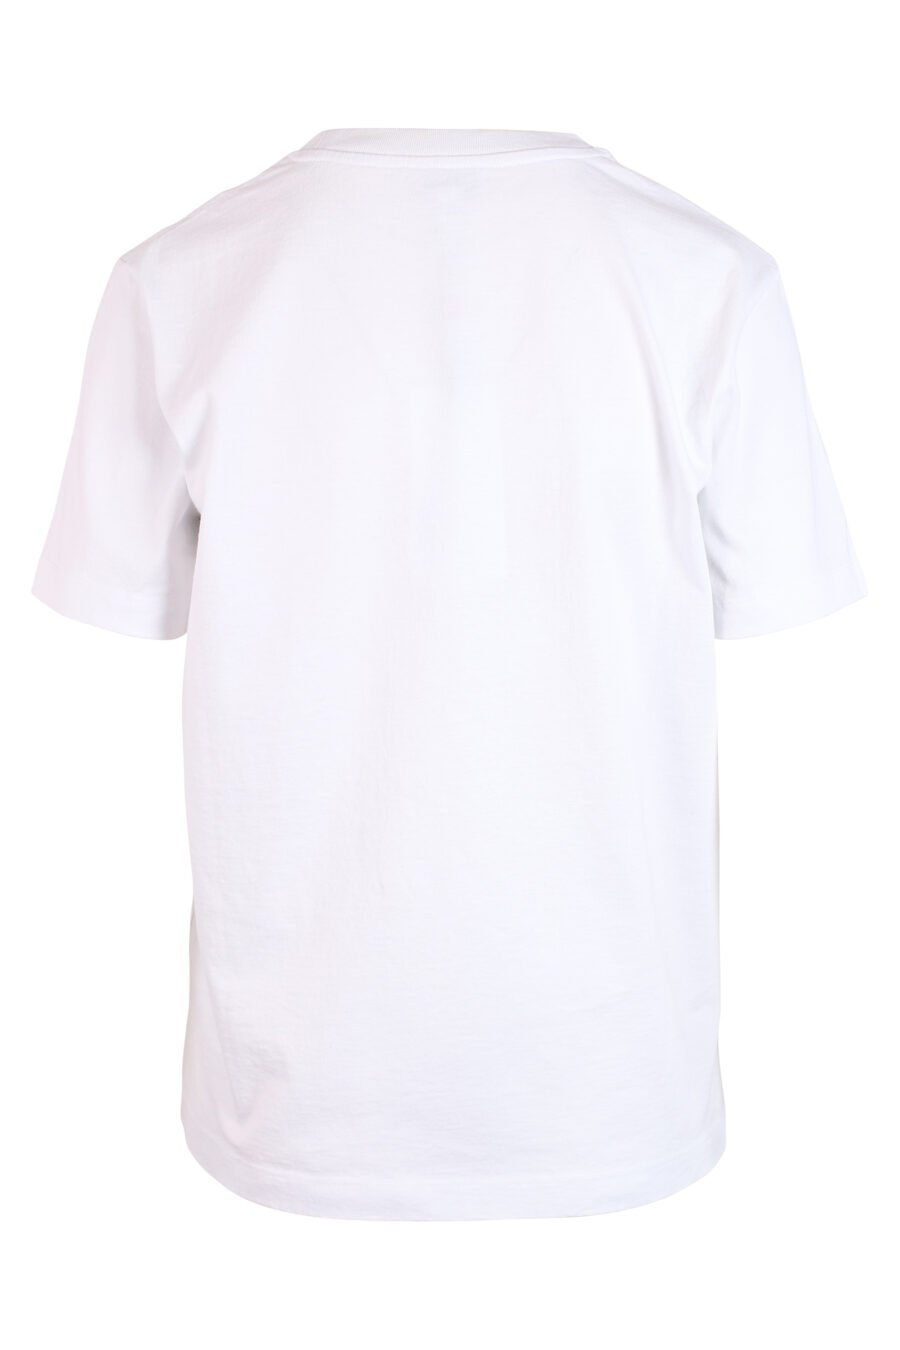 T-shirt blanc avec maxilogo vert "paris" - IMG 3270